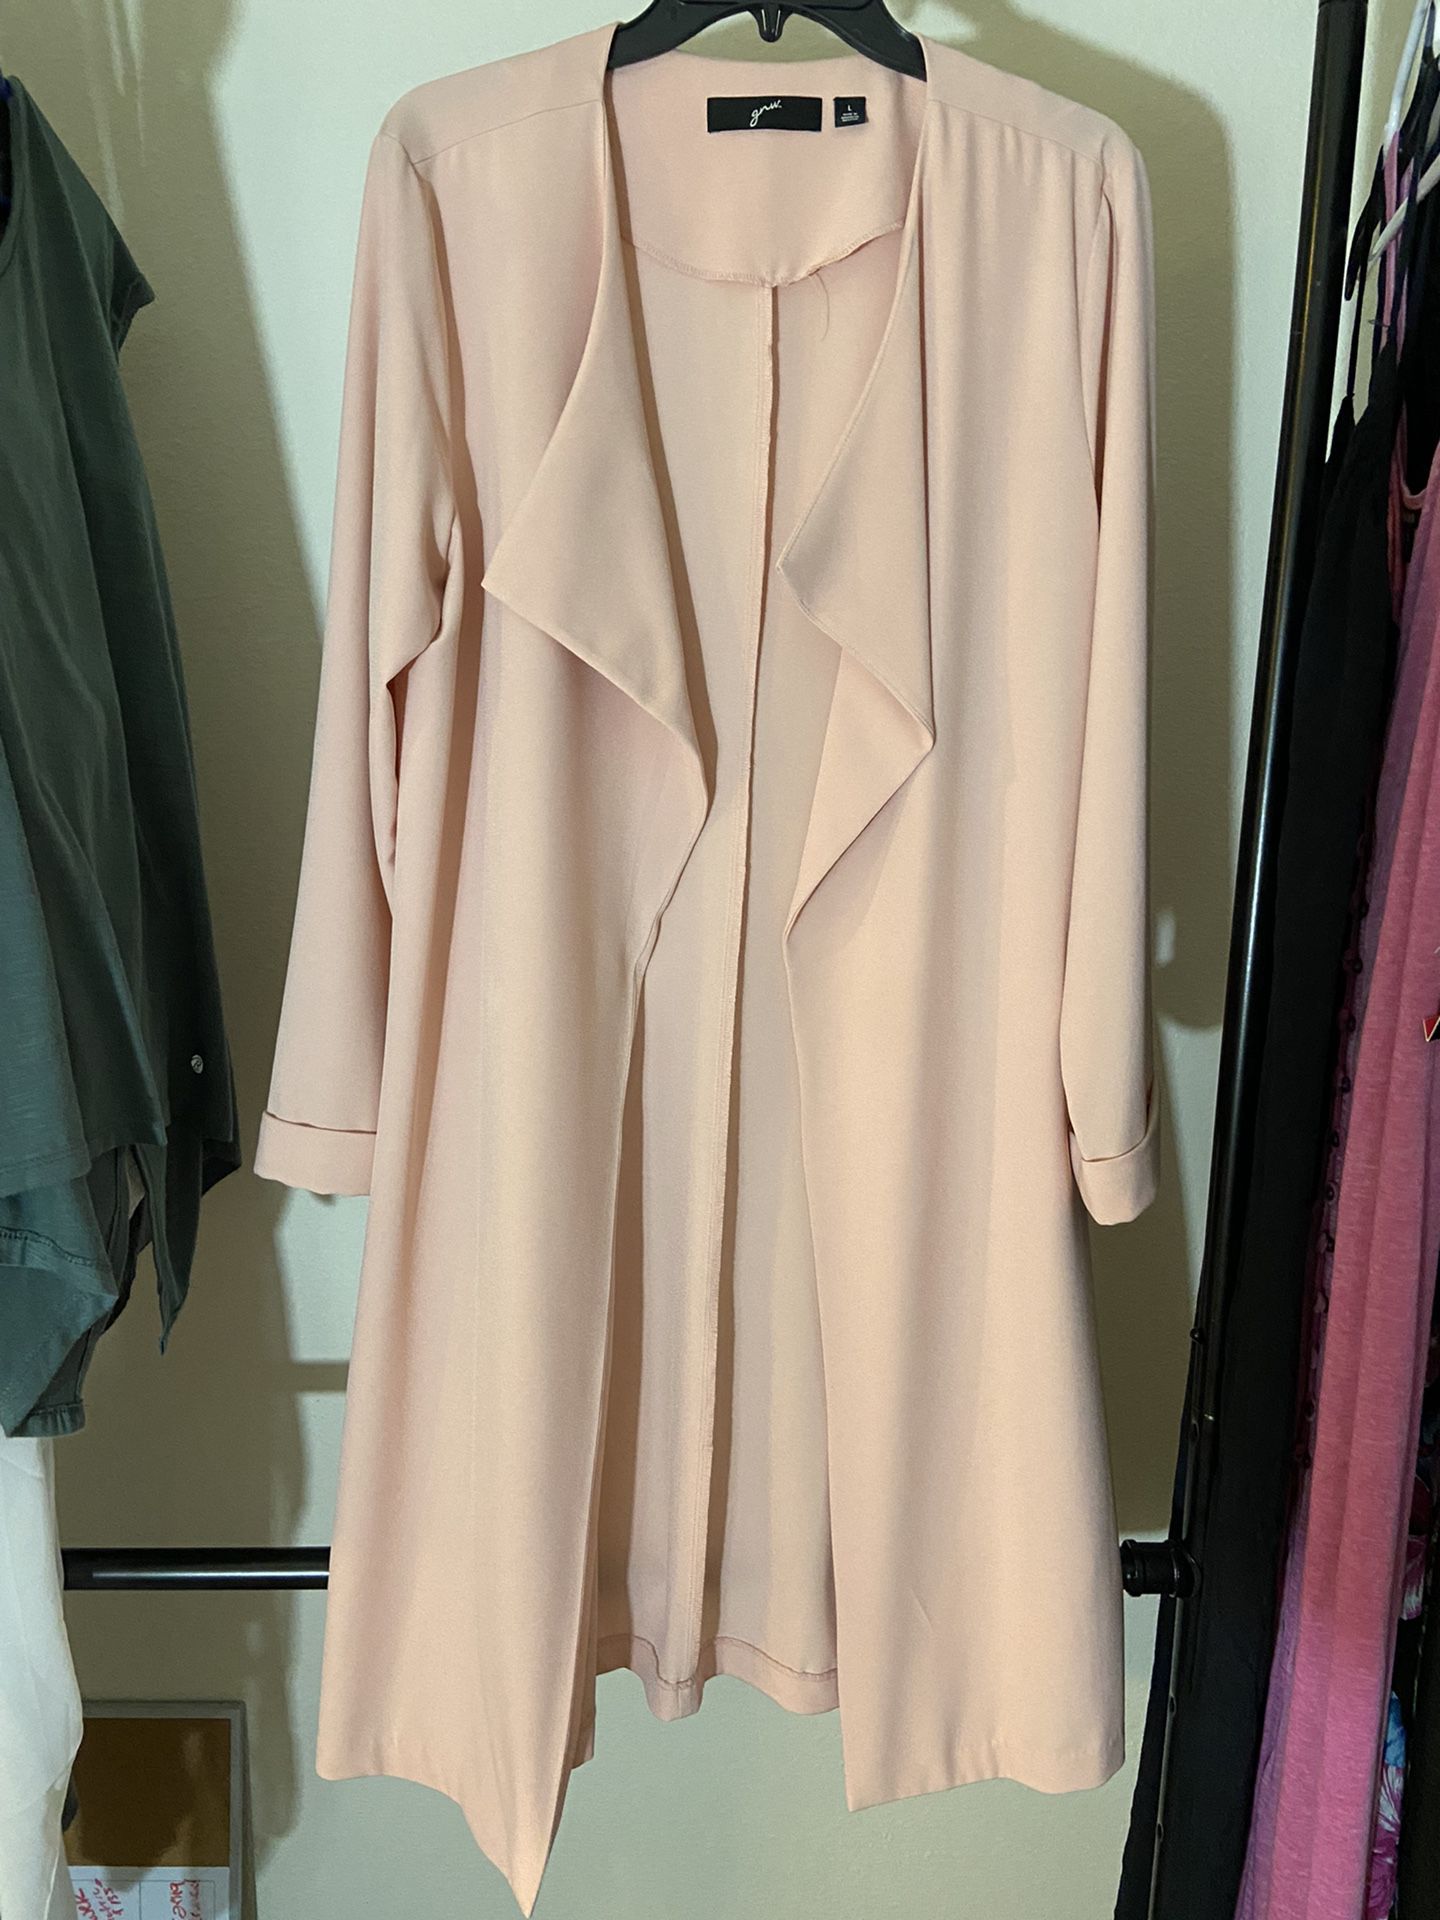 Dusty pink large mid length cardigan/coat